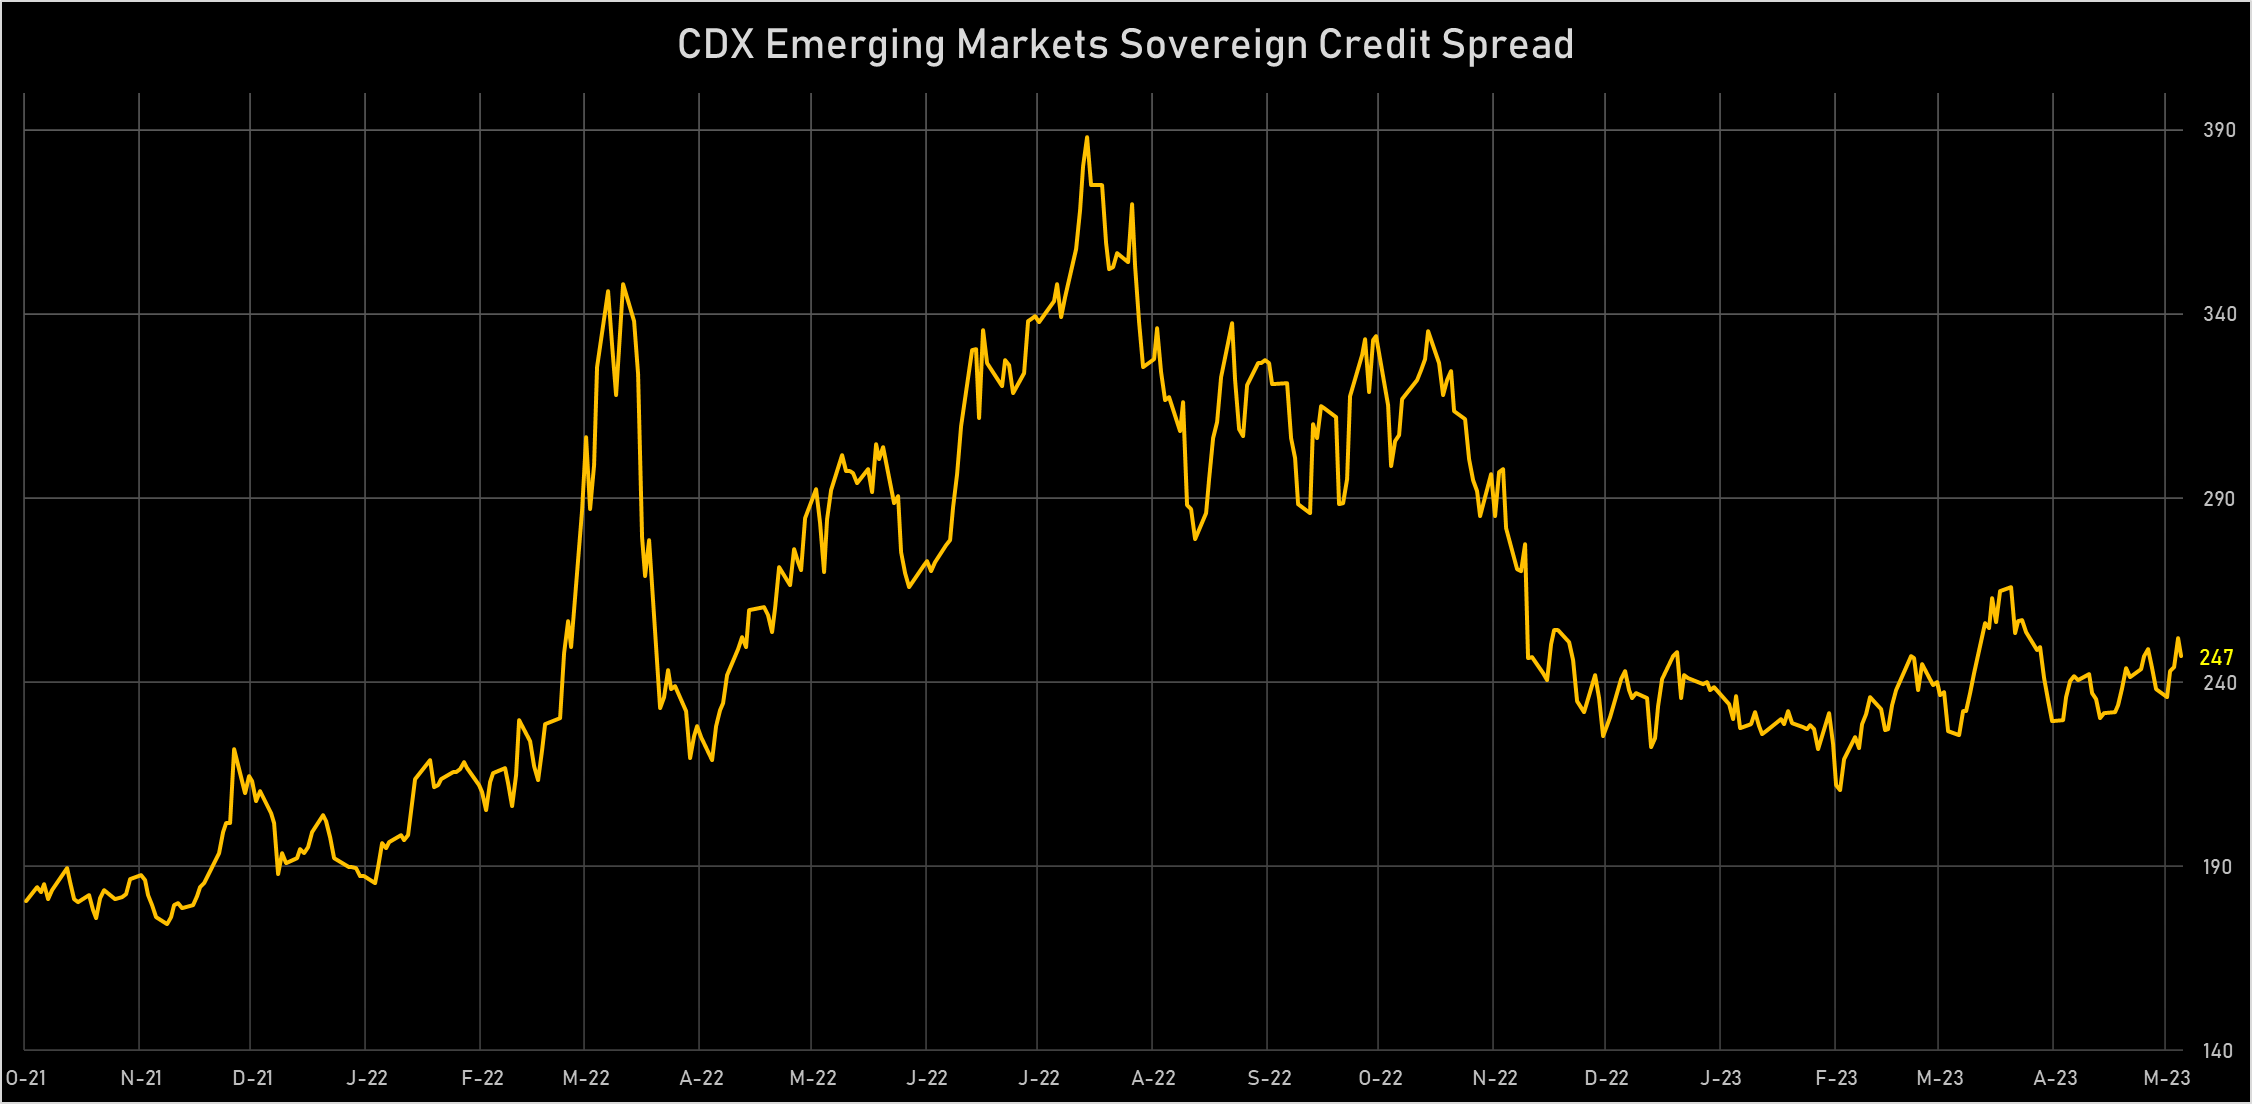 CDX EM sovereign credit spread | Sources: phipost.com, Refinitiv data